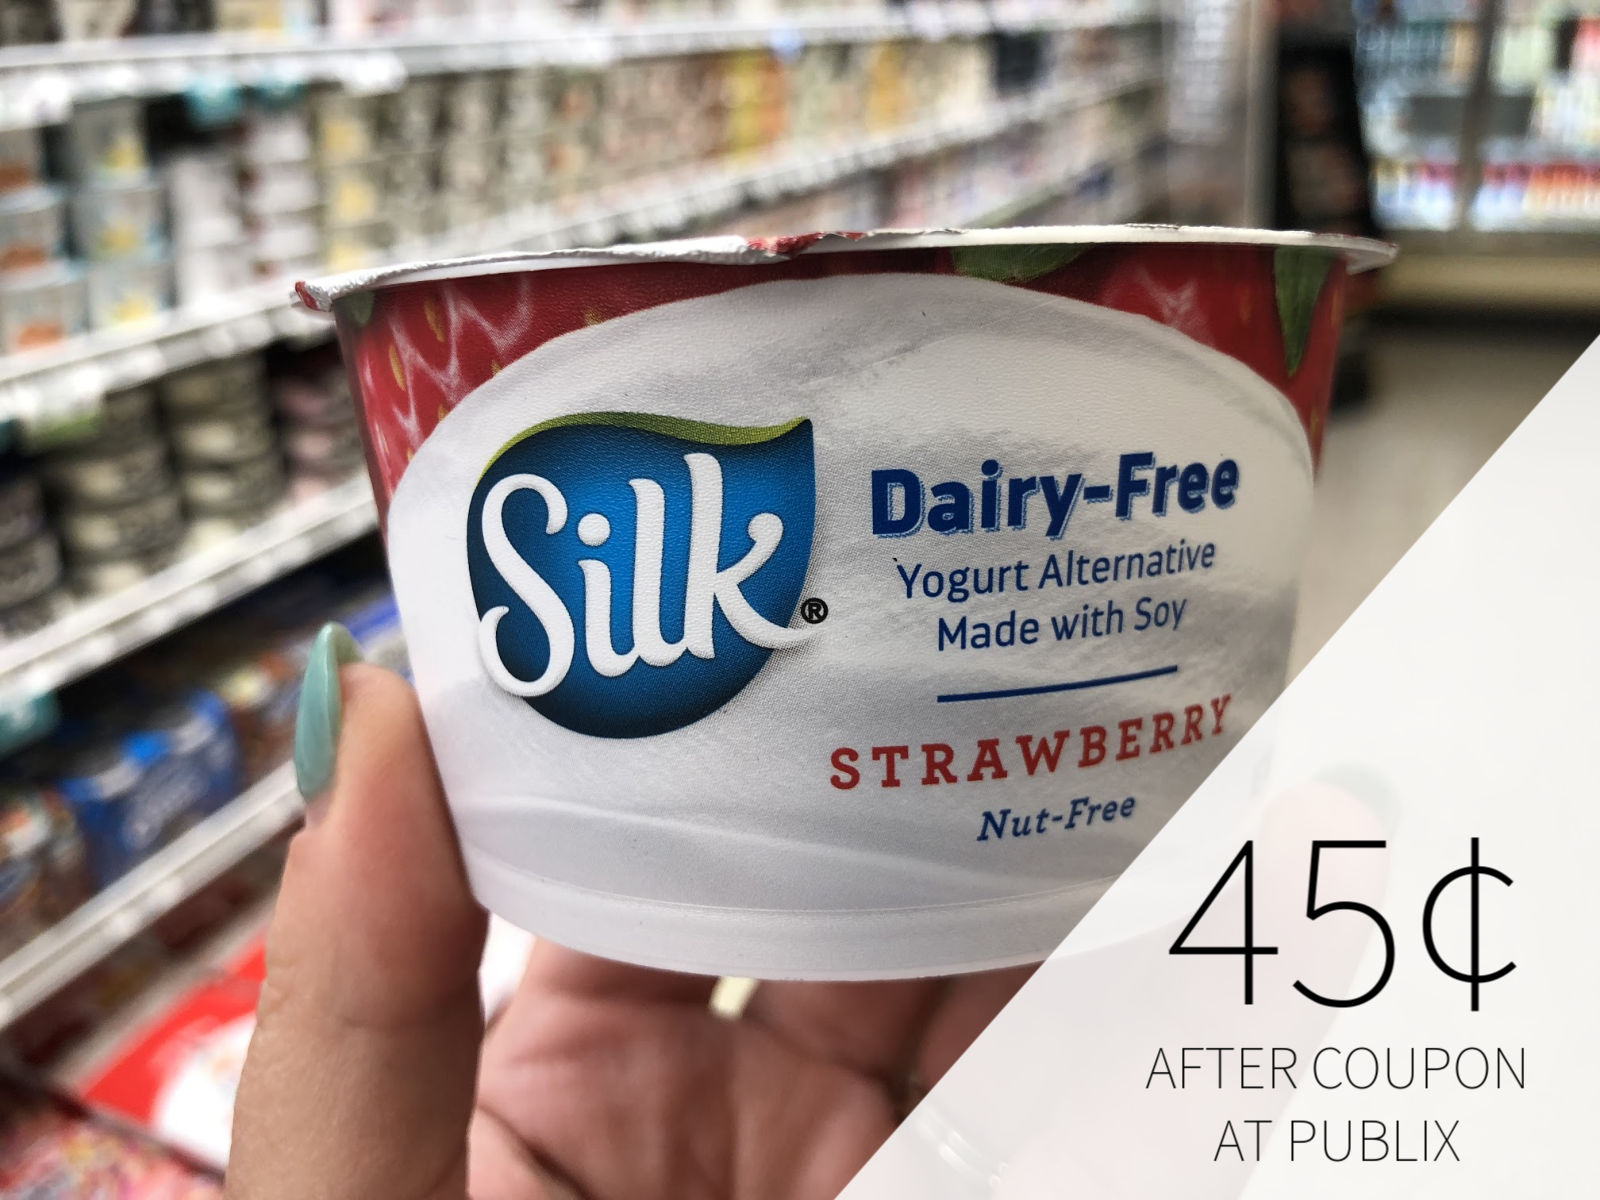 New Silk Yogurt Alternative Coupon Makes Cups Just 45¢ At Publix on I Heart Publix